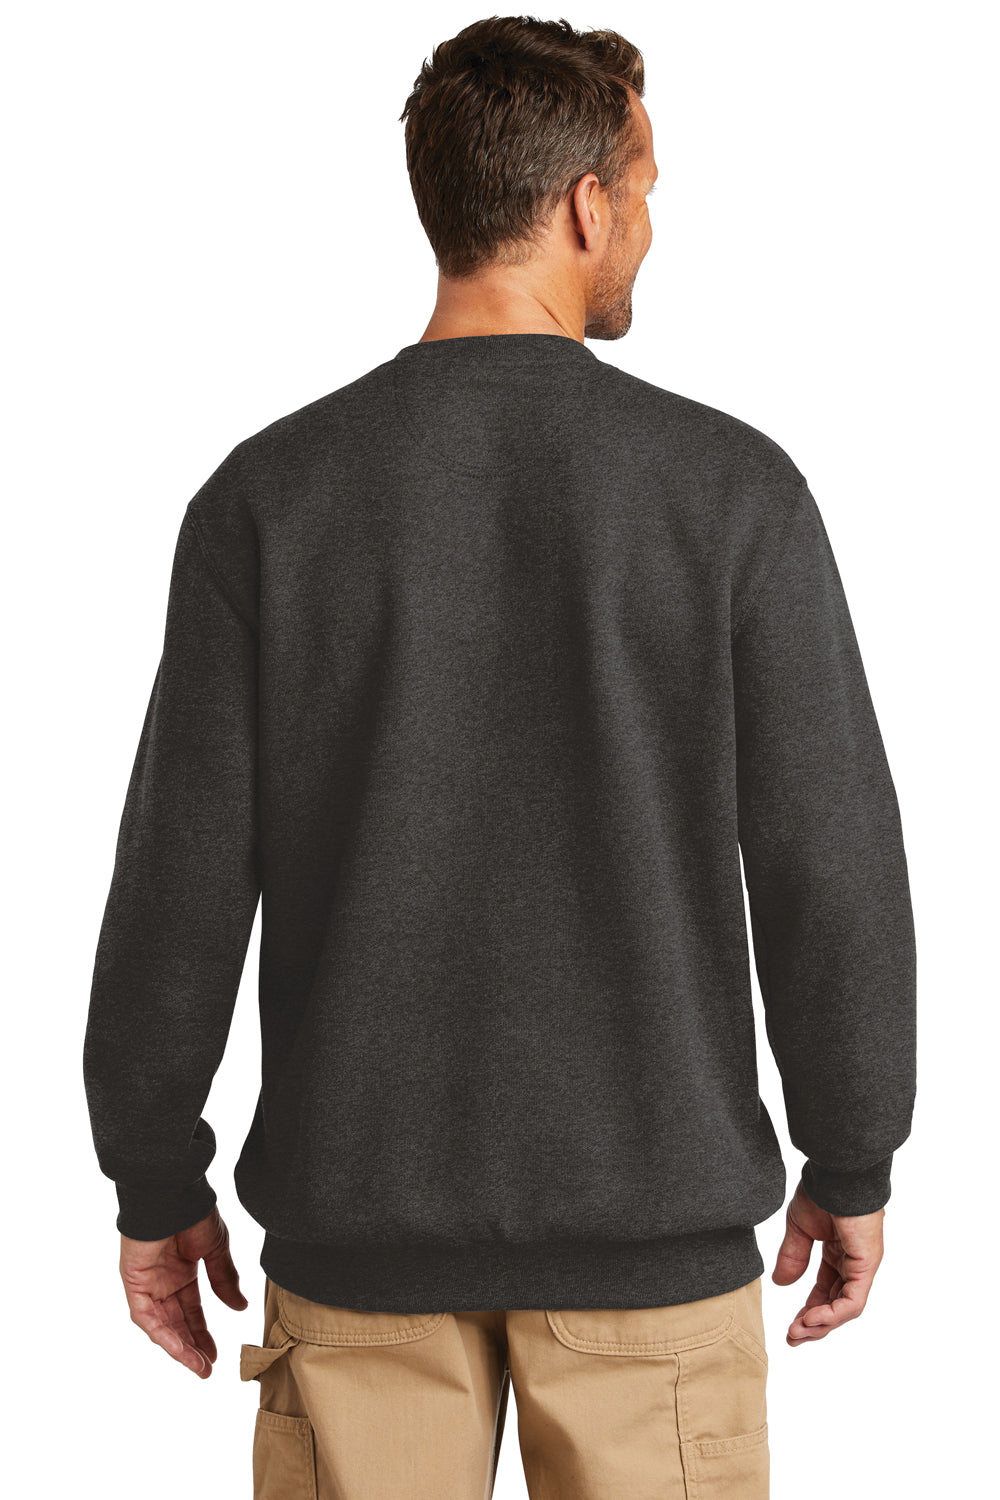 Carhartt CTK124 Mens Crewneck Sweatshirt Heather Carbon Grey Model Back